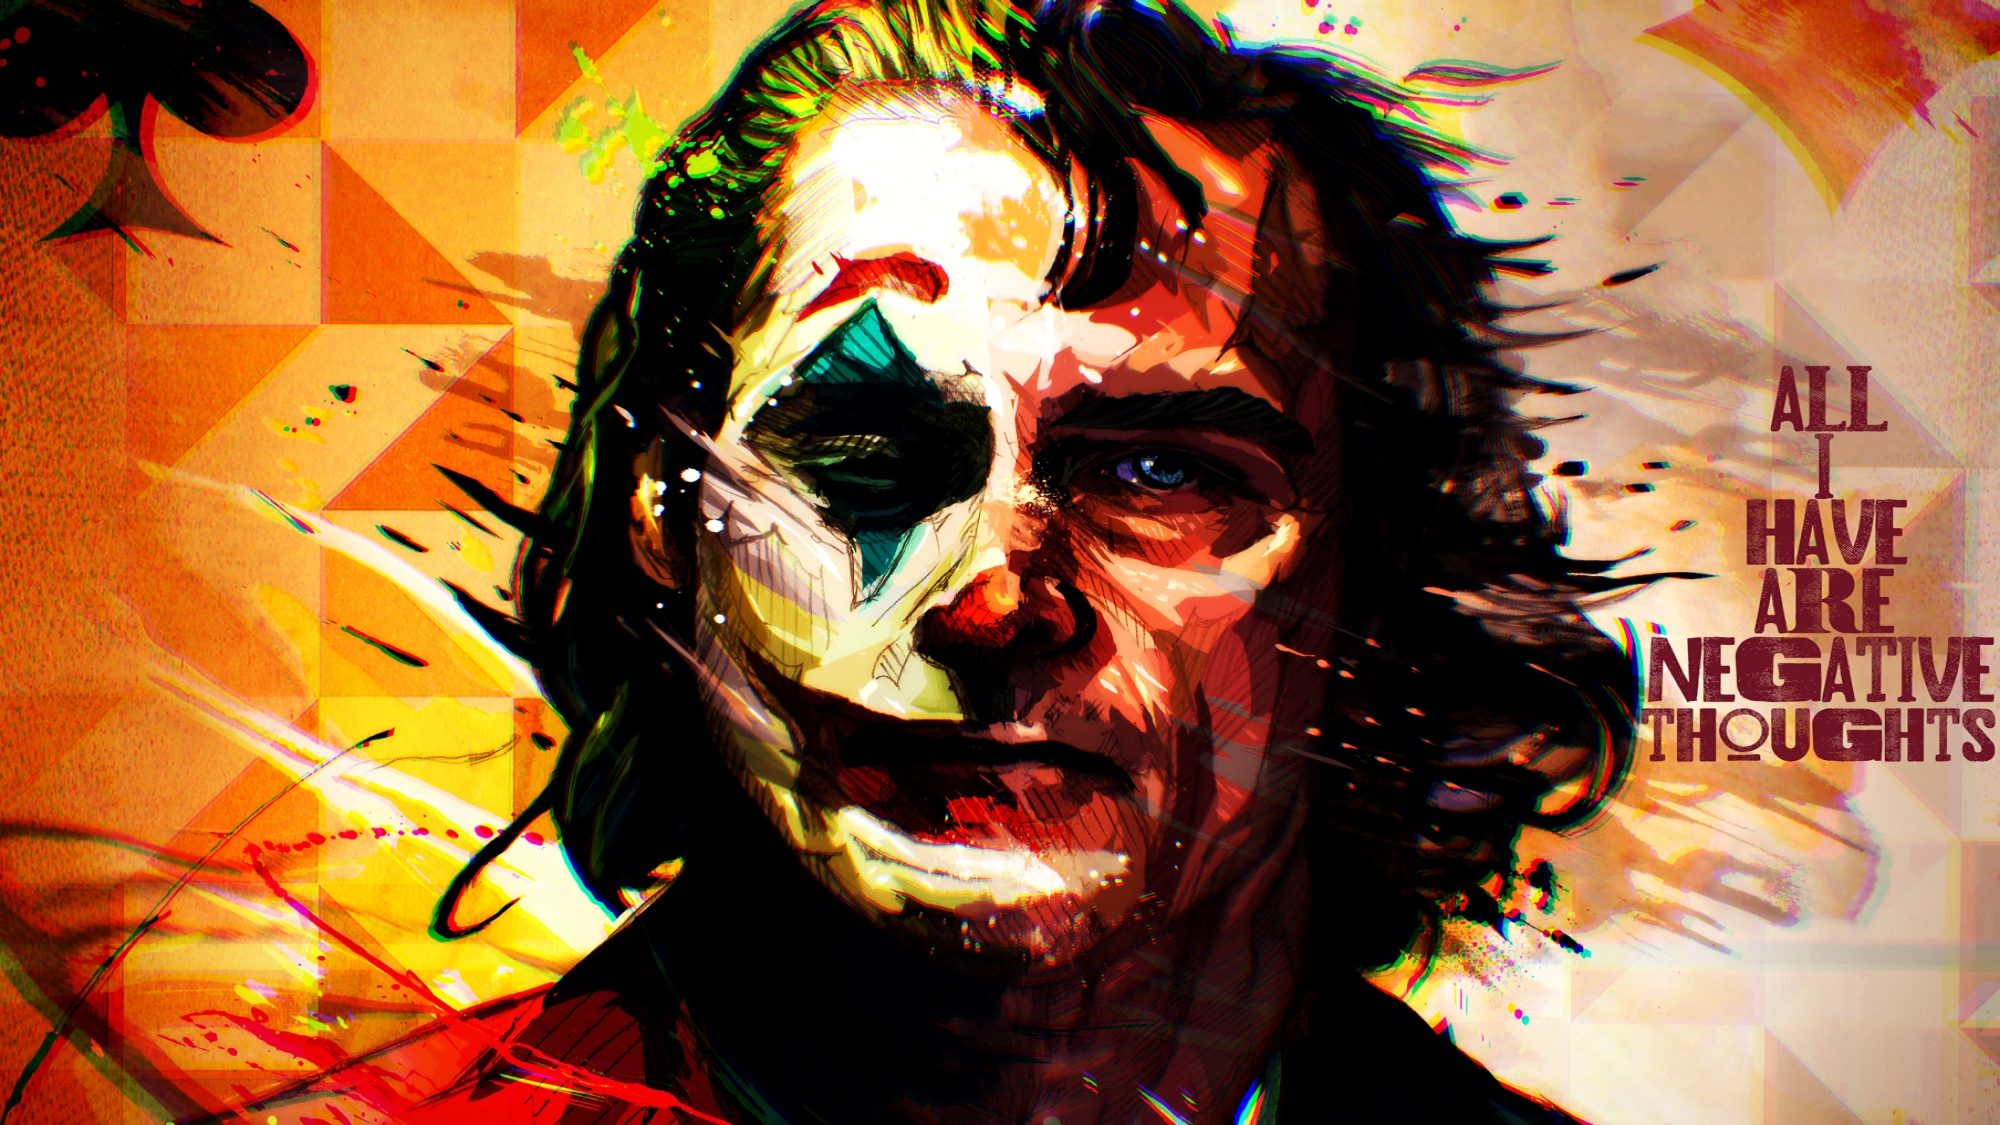 General 2000x1125 Joker Joker (2019 Movie) Joaquin Phoenix artwork movies quote face